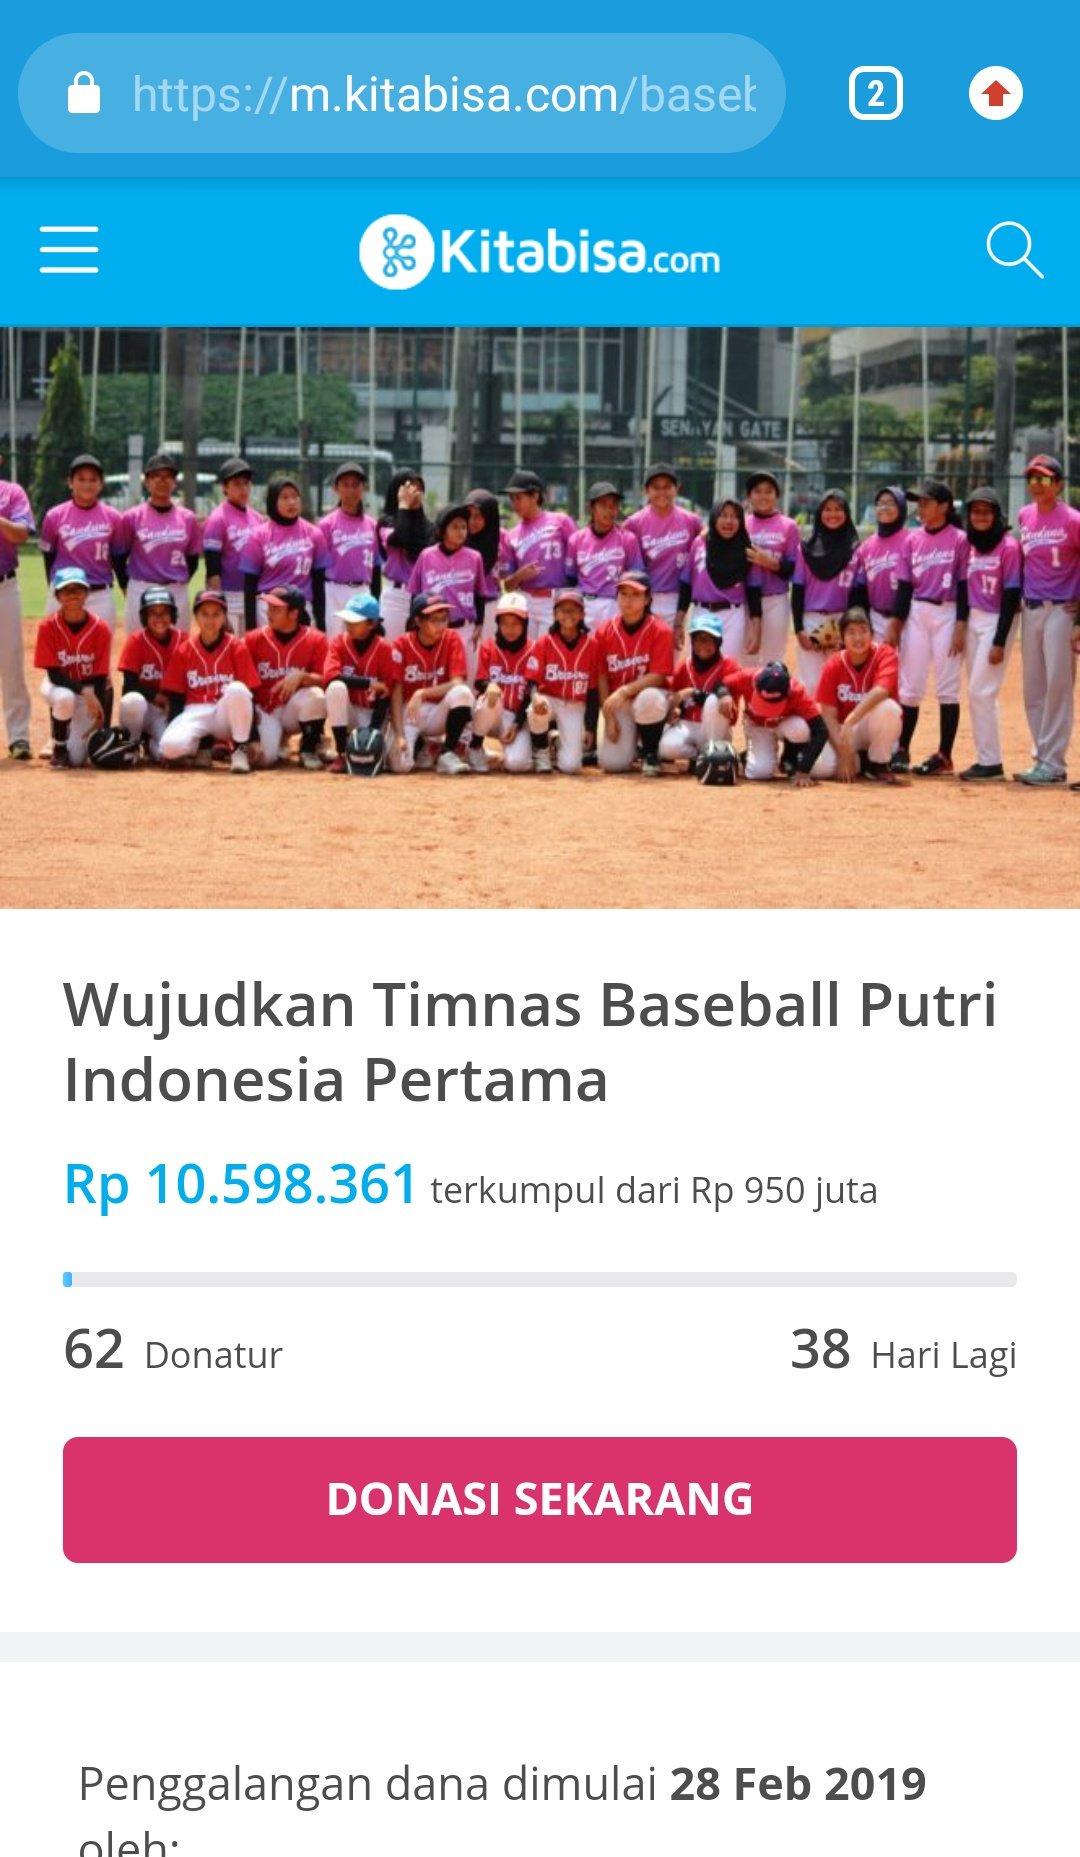 Baseball Putri Indonesia Copyright: Baseball Putri Indonesia